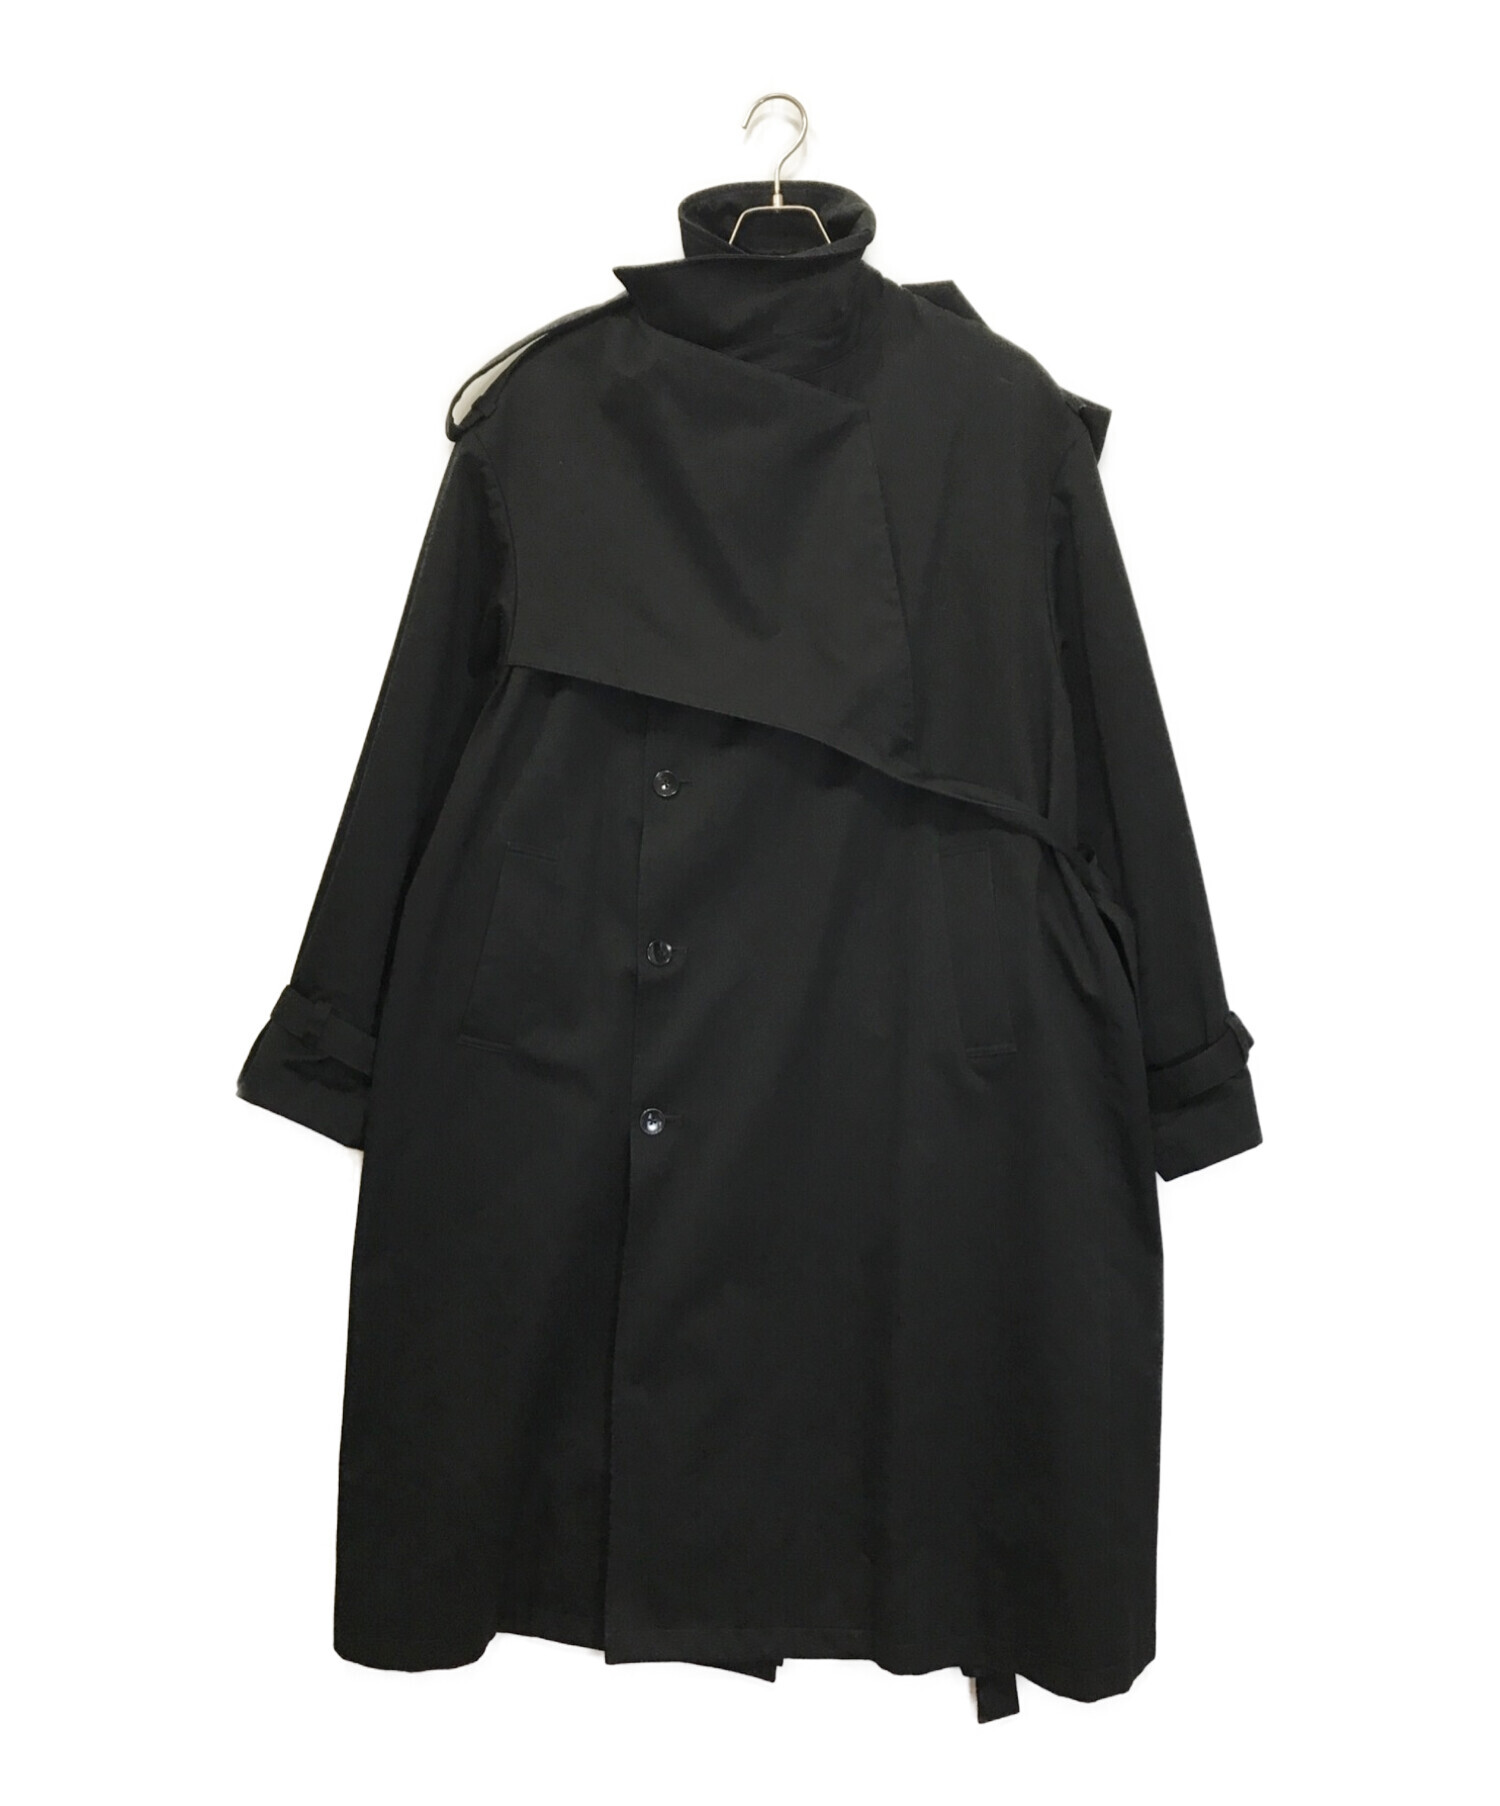 keisuke yoshida (ケイスケヨシダ) belted trench coat ブラック サイズ:F